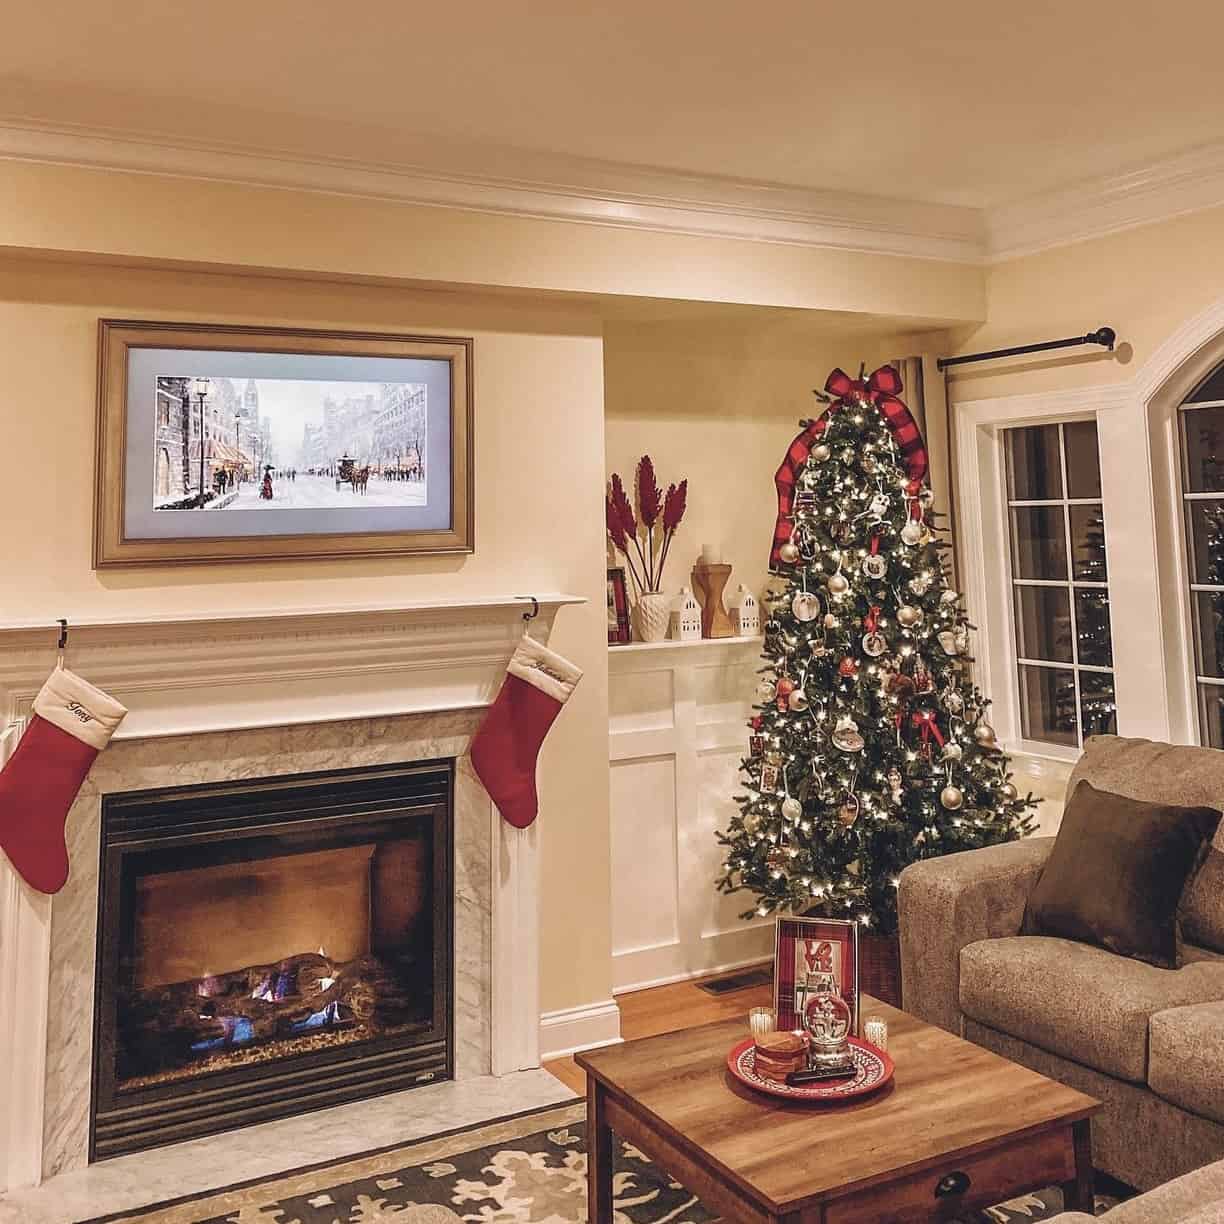 Samsung Frame tv with Christmas decor